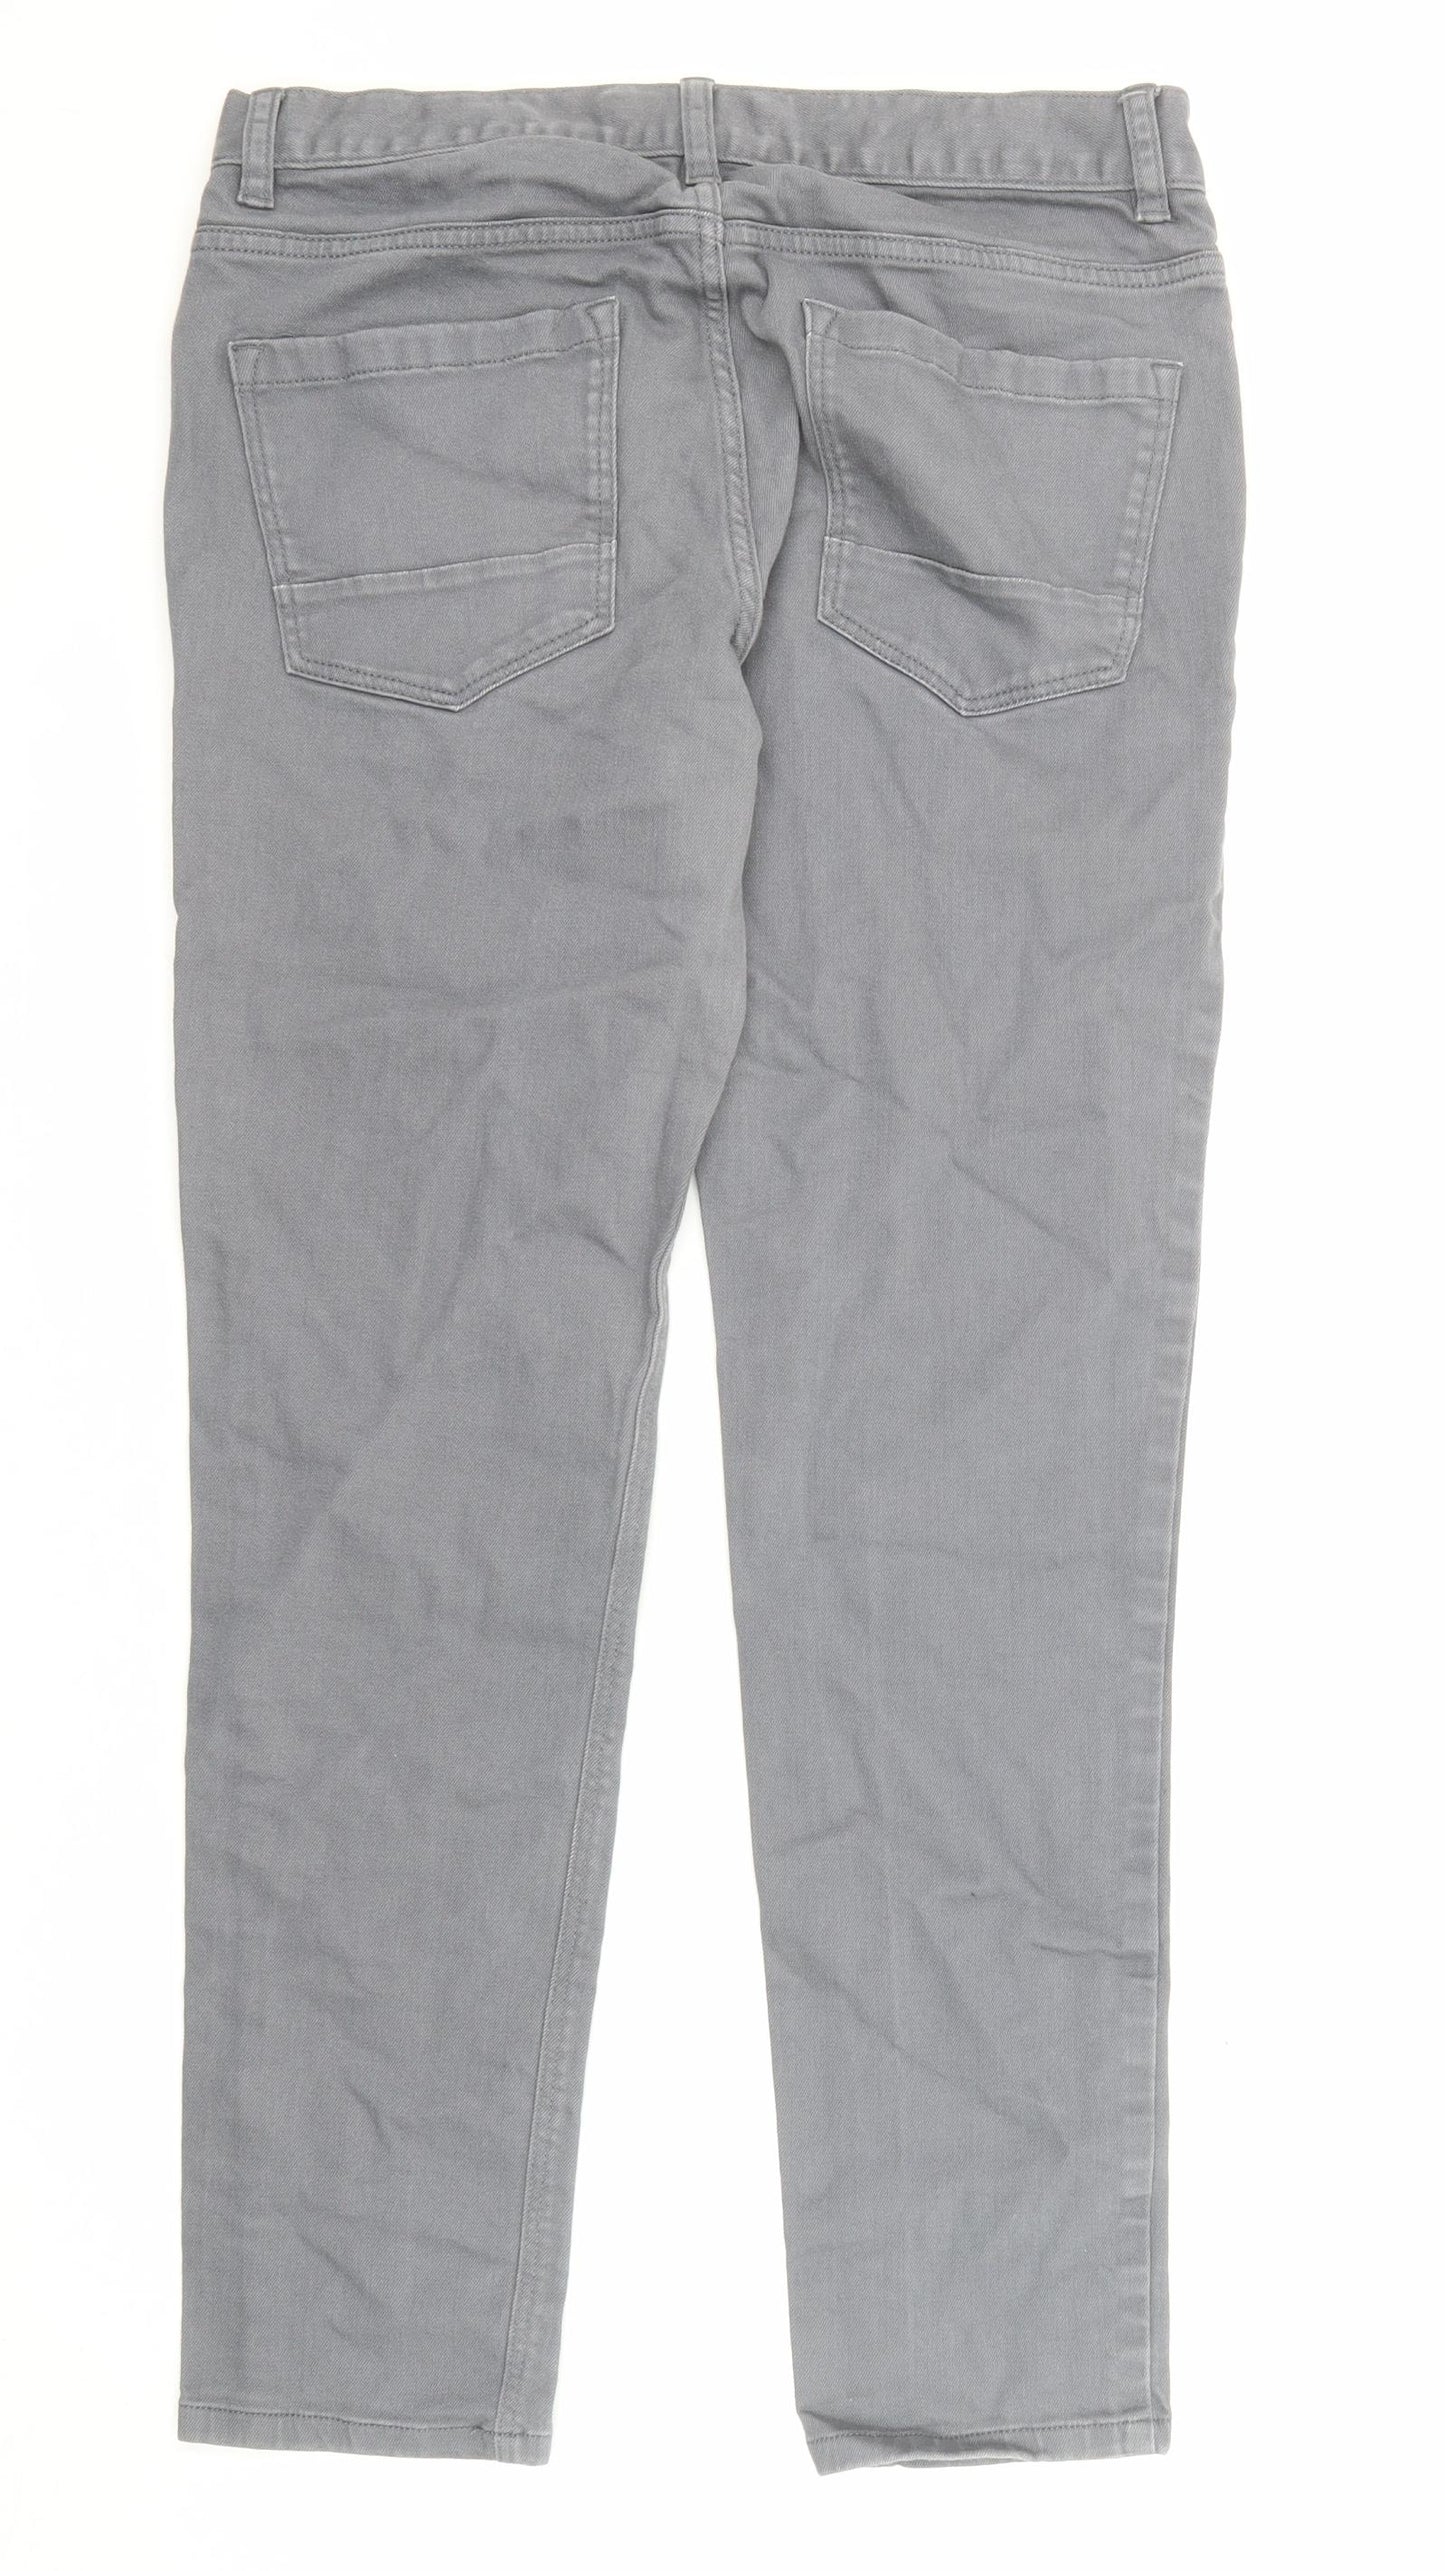 NEXT Mens Grey Cotton Skinny Jeans Size 32 in L31 in Regular Zip